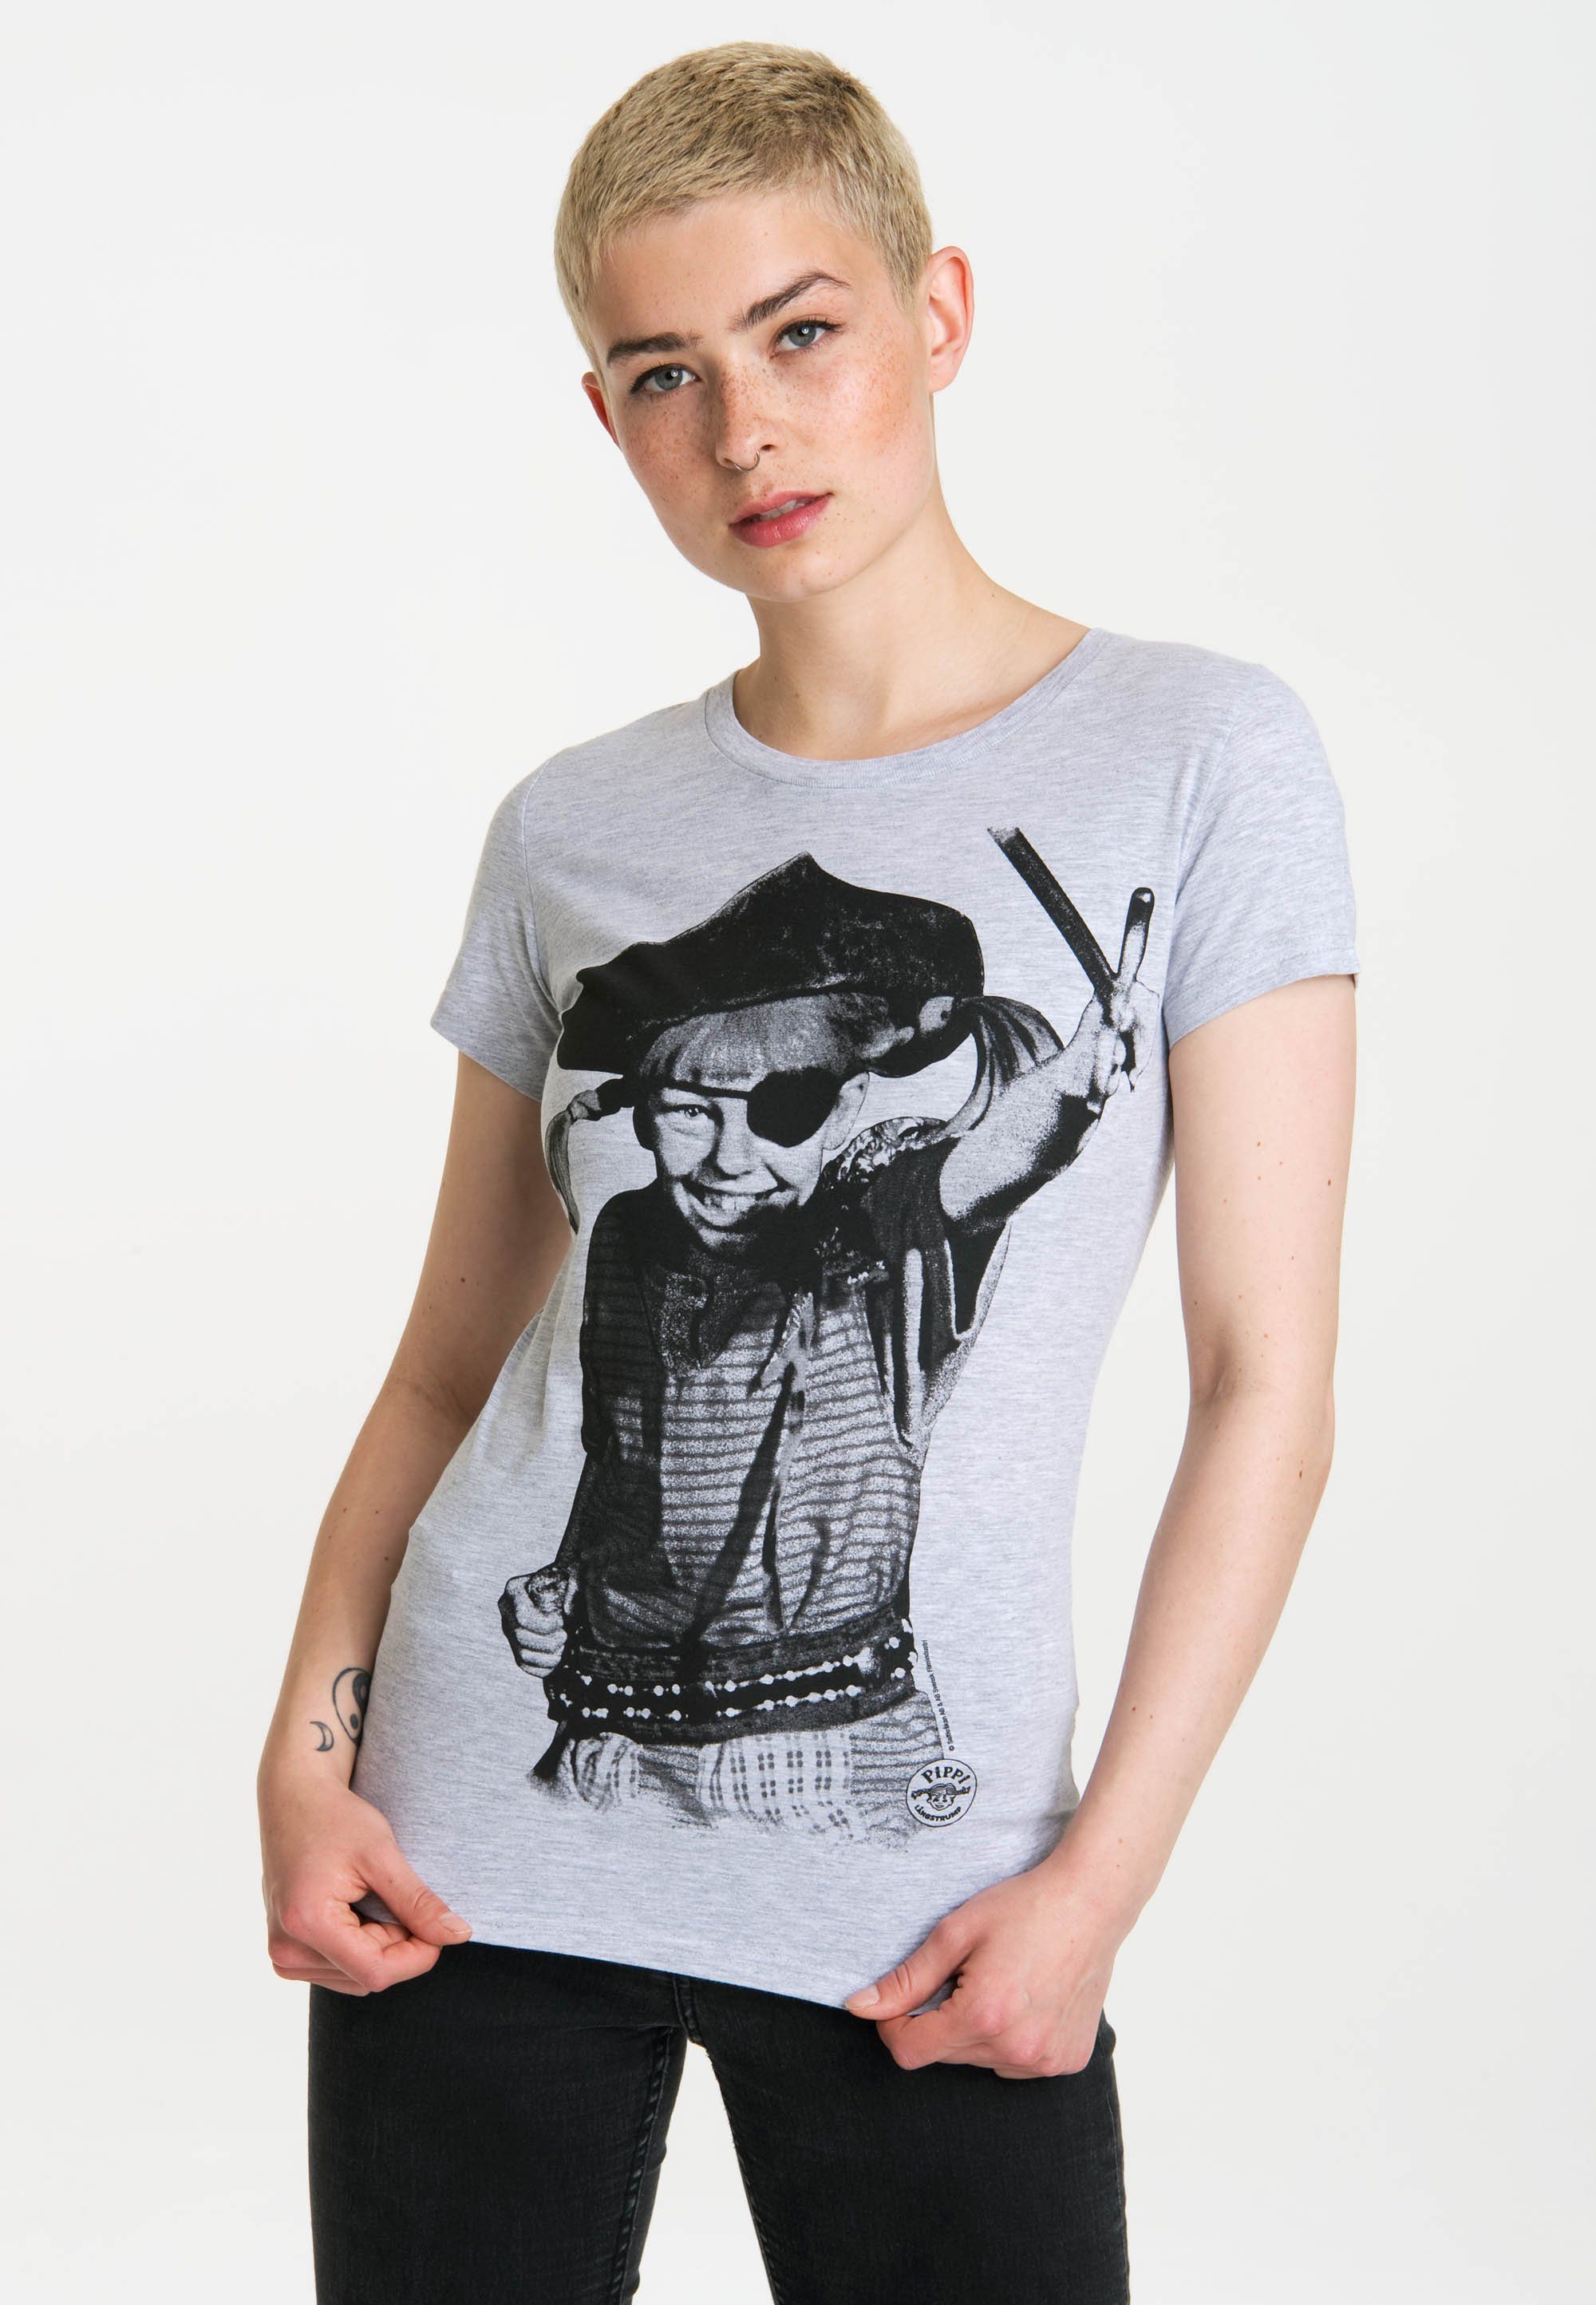 LOGOSHIRT T-Shirt Pippi Langstrumpf - Pirat mit niedlichem Print